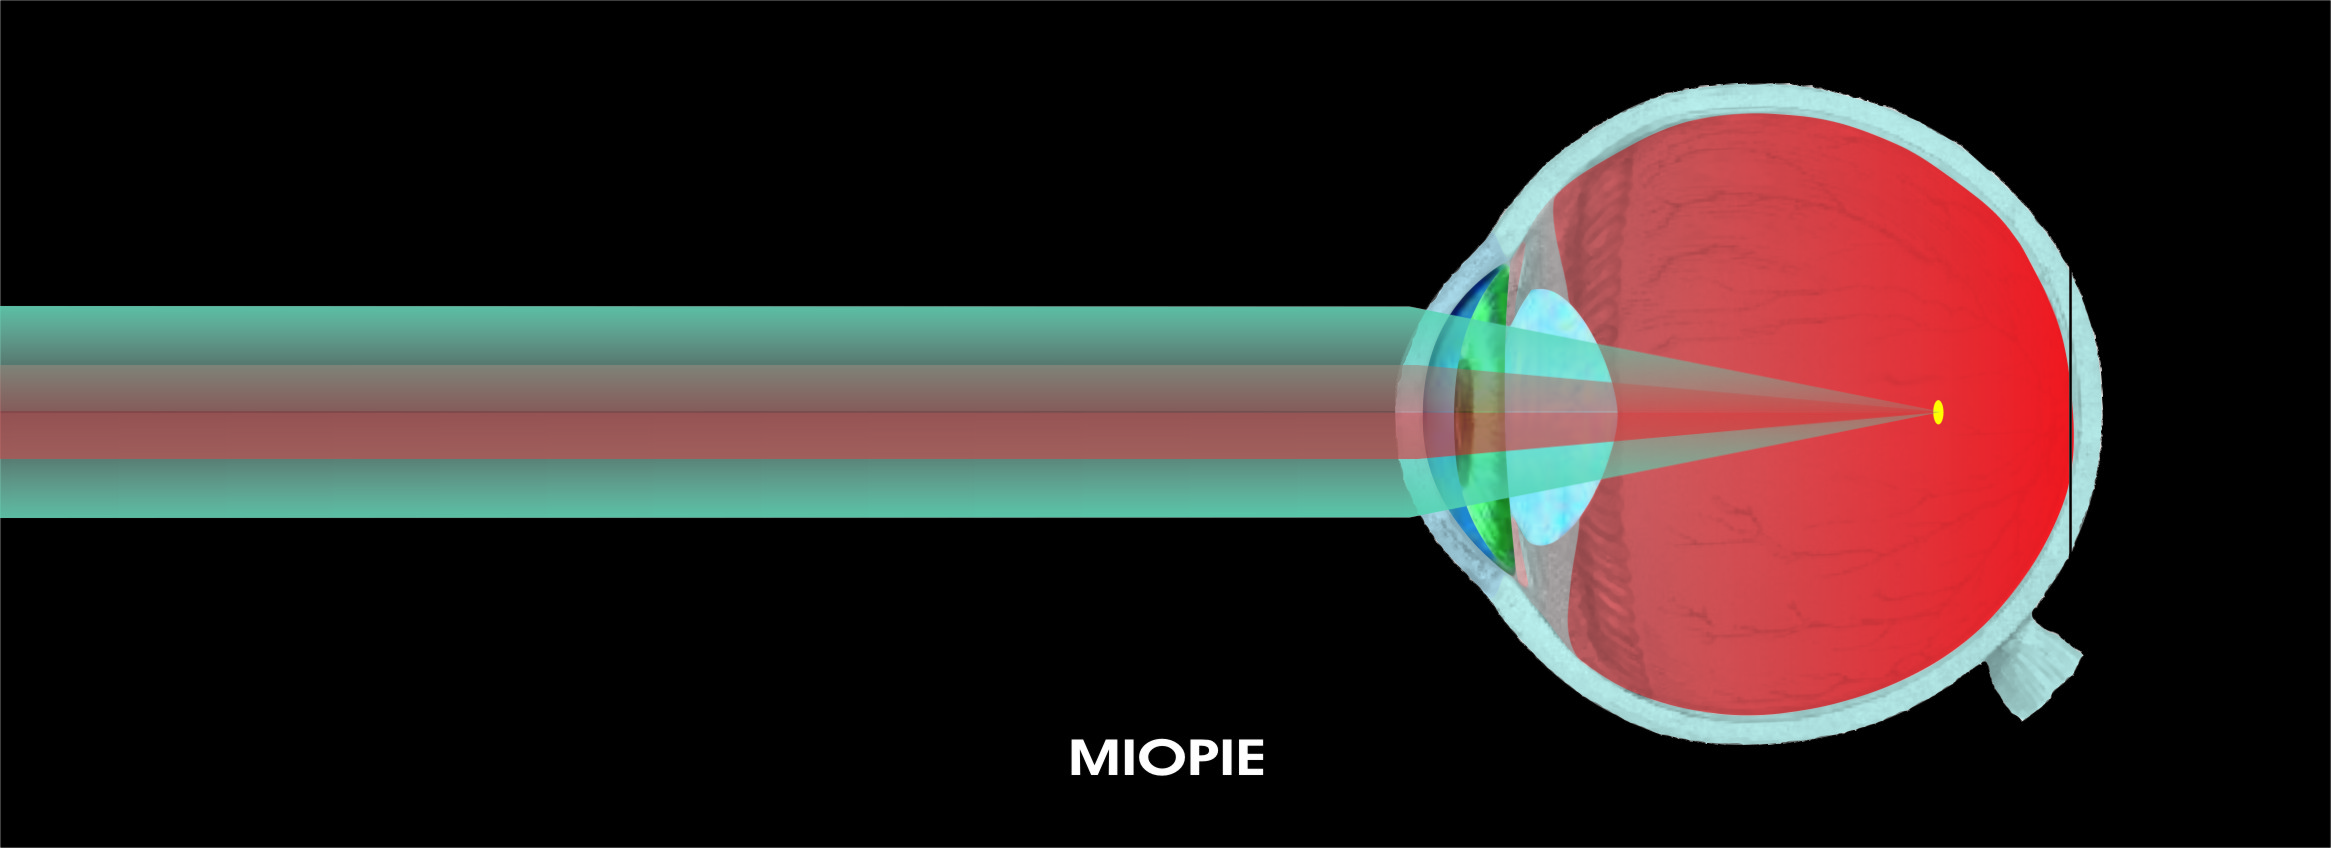 Miopie - Wikipedia